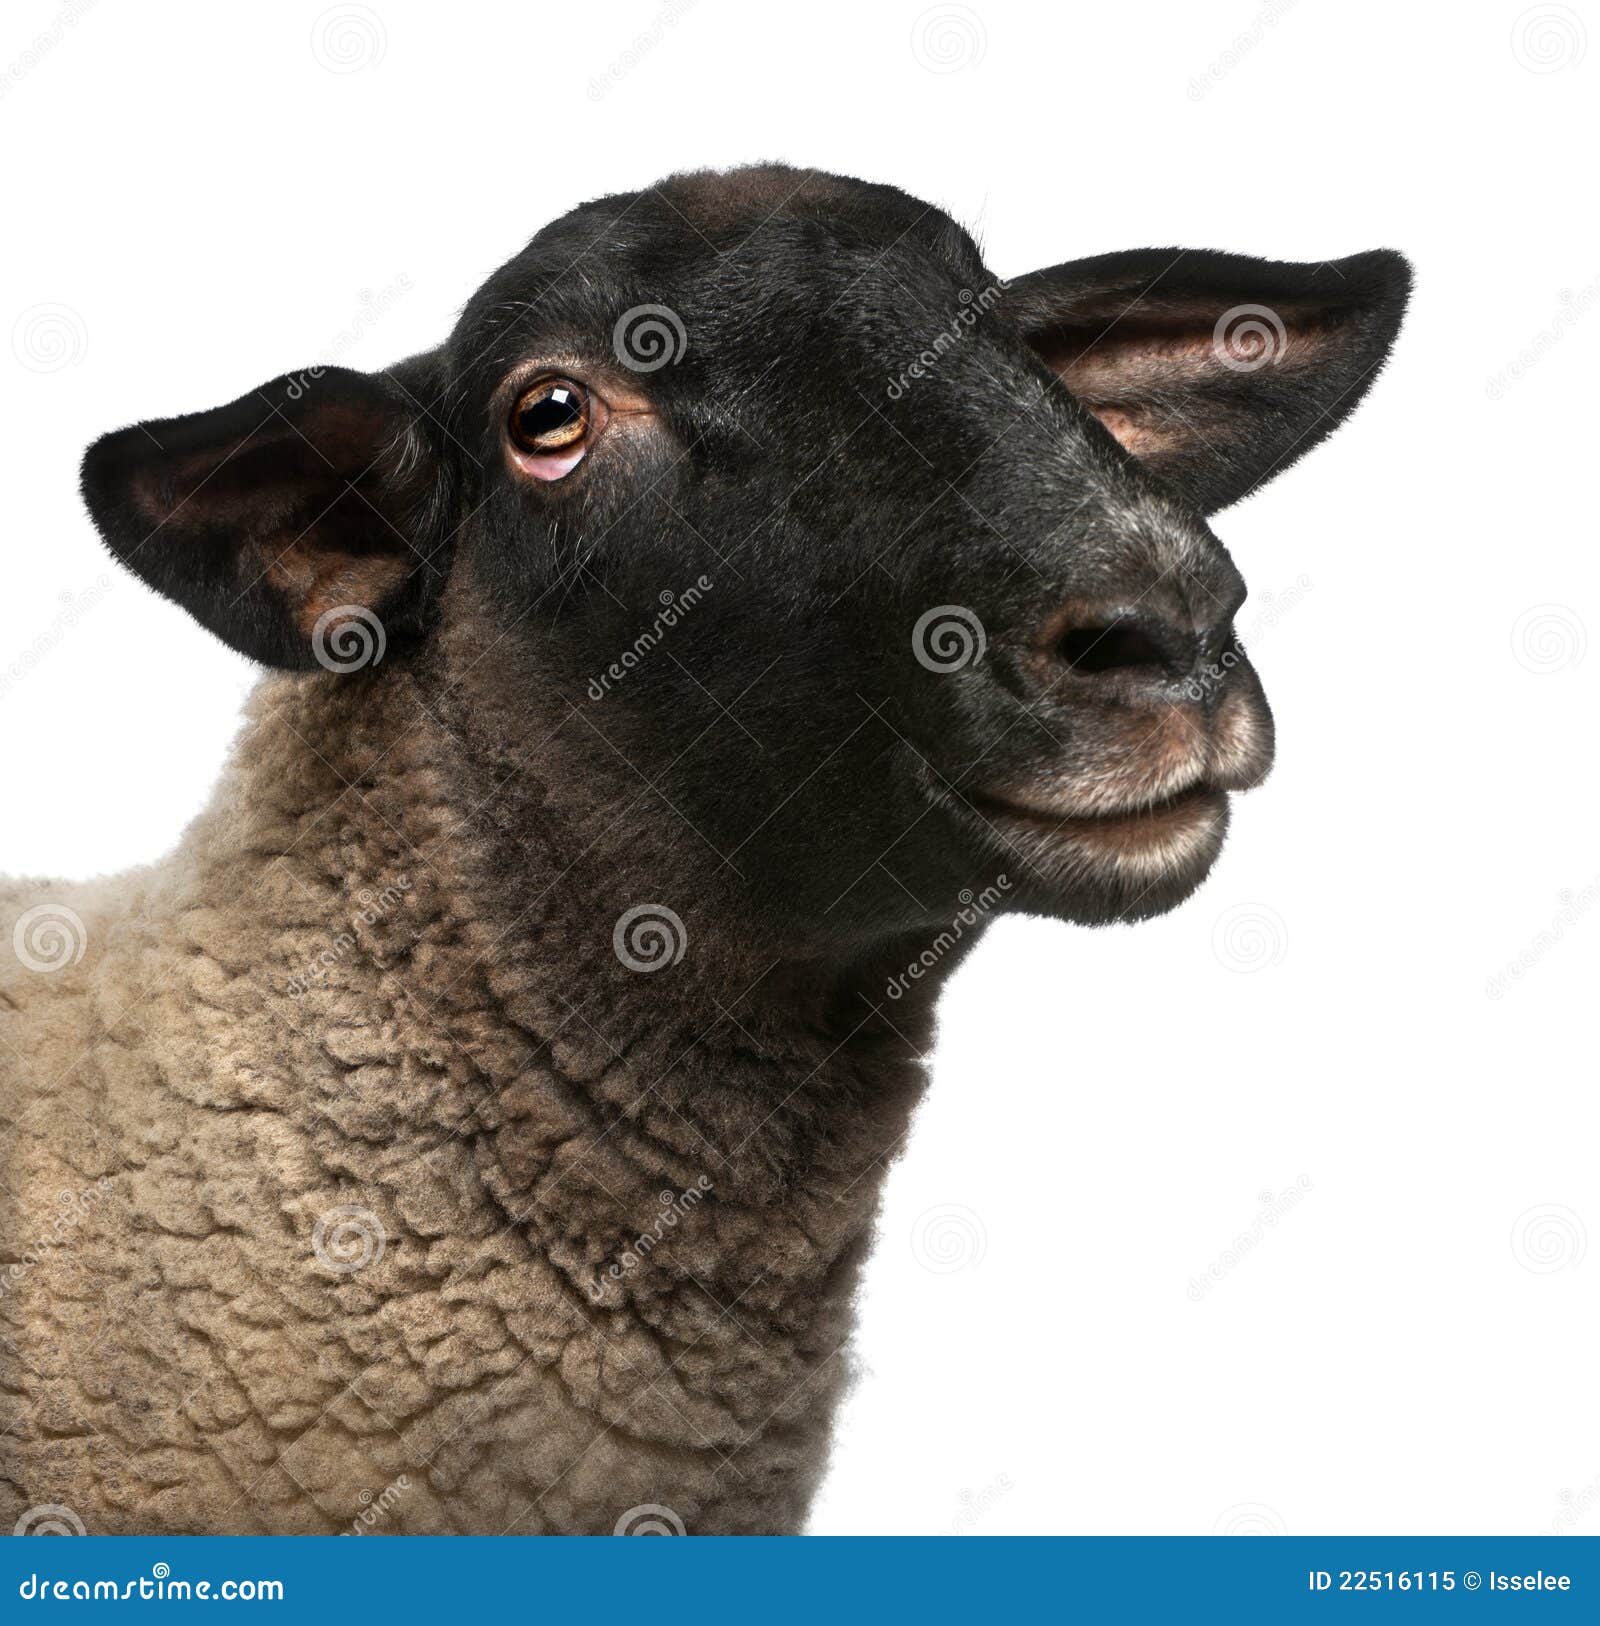 female suffolk sheep, ovis aries, 2 years old